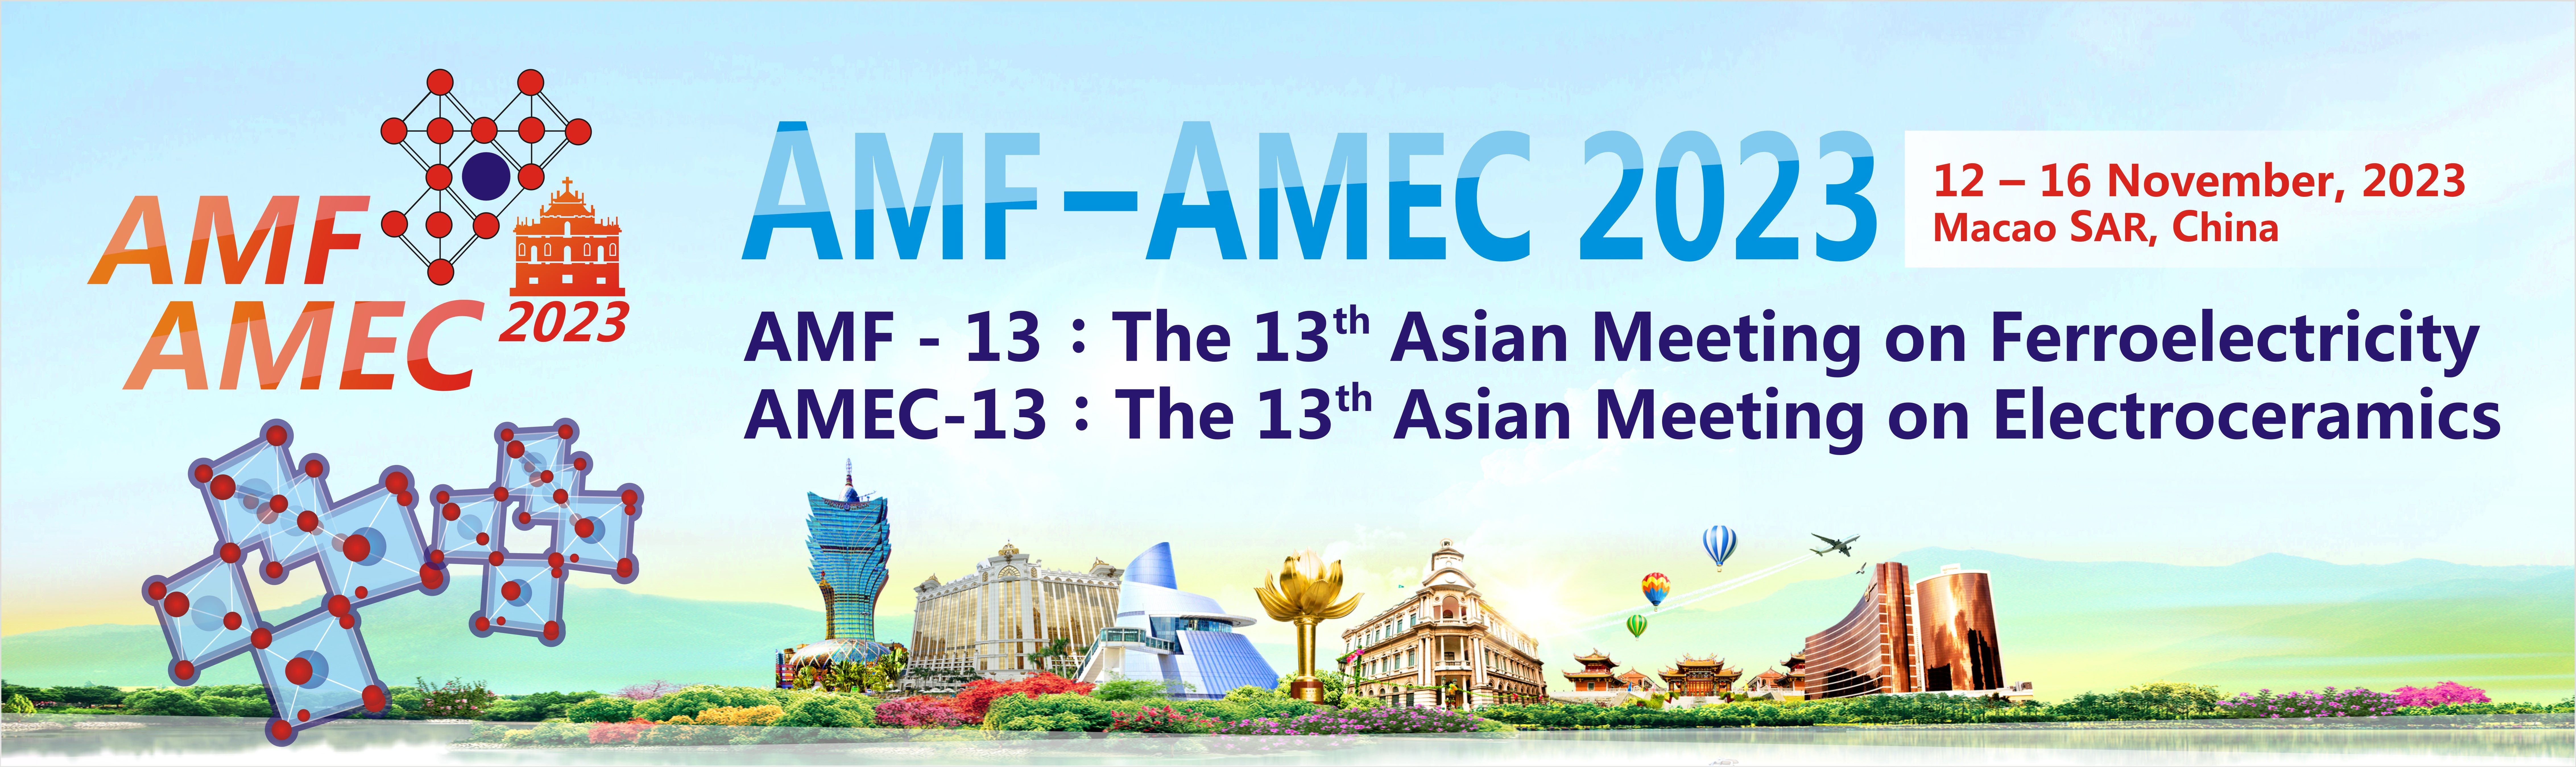 AMF-AMEC 2023